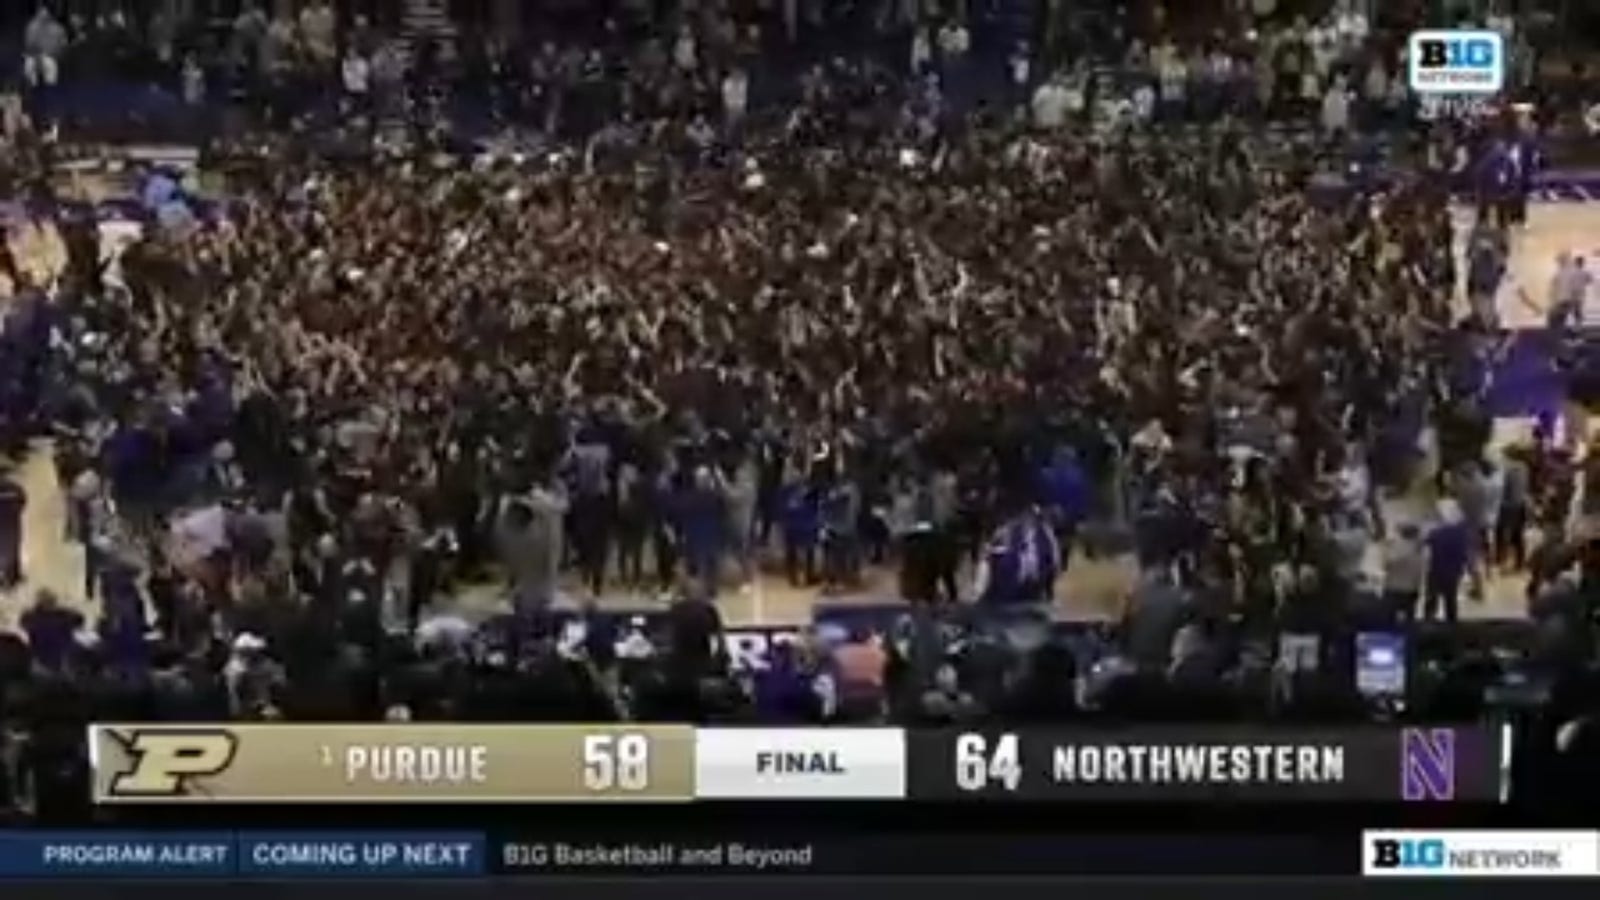 Fans storm court after Northwestern upsets No. 1 Purdue, 64-58